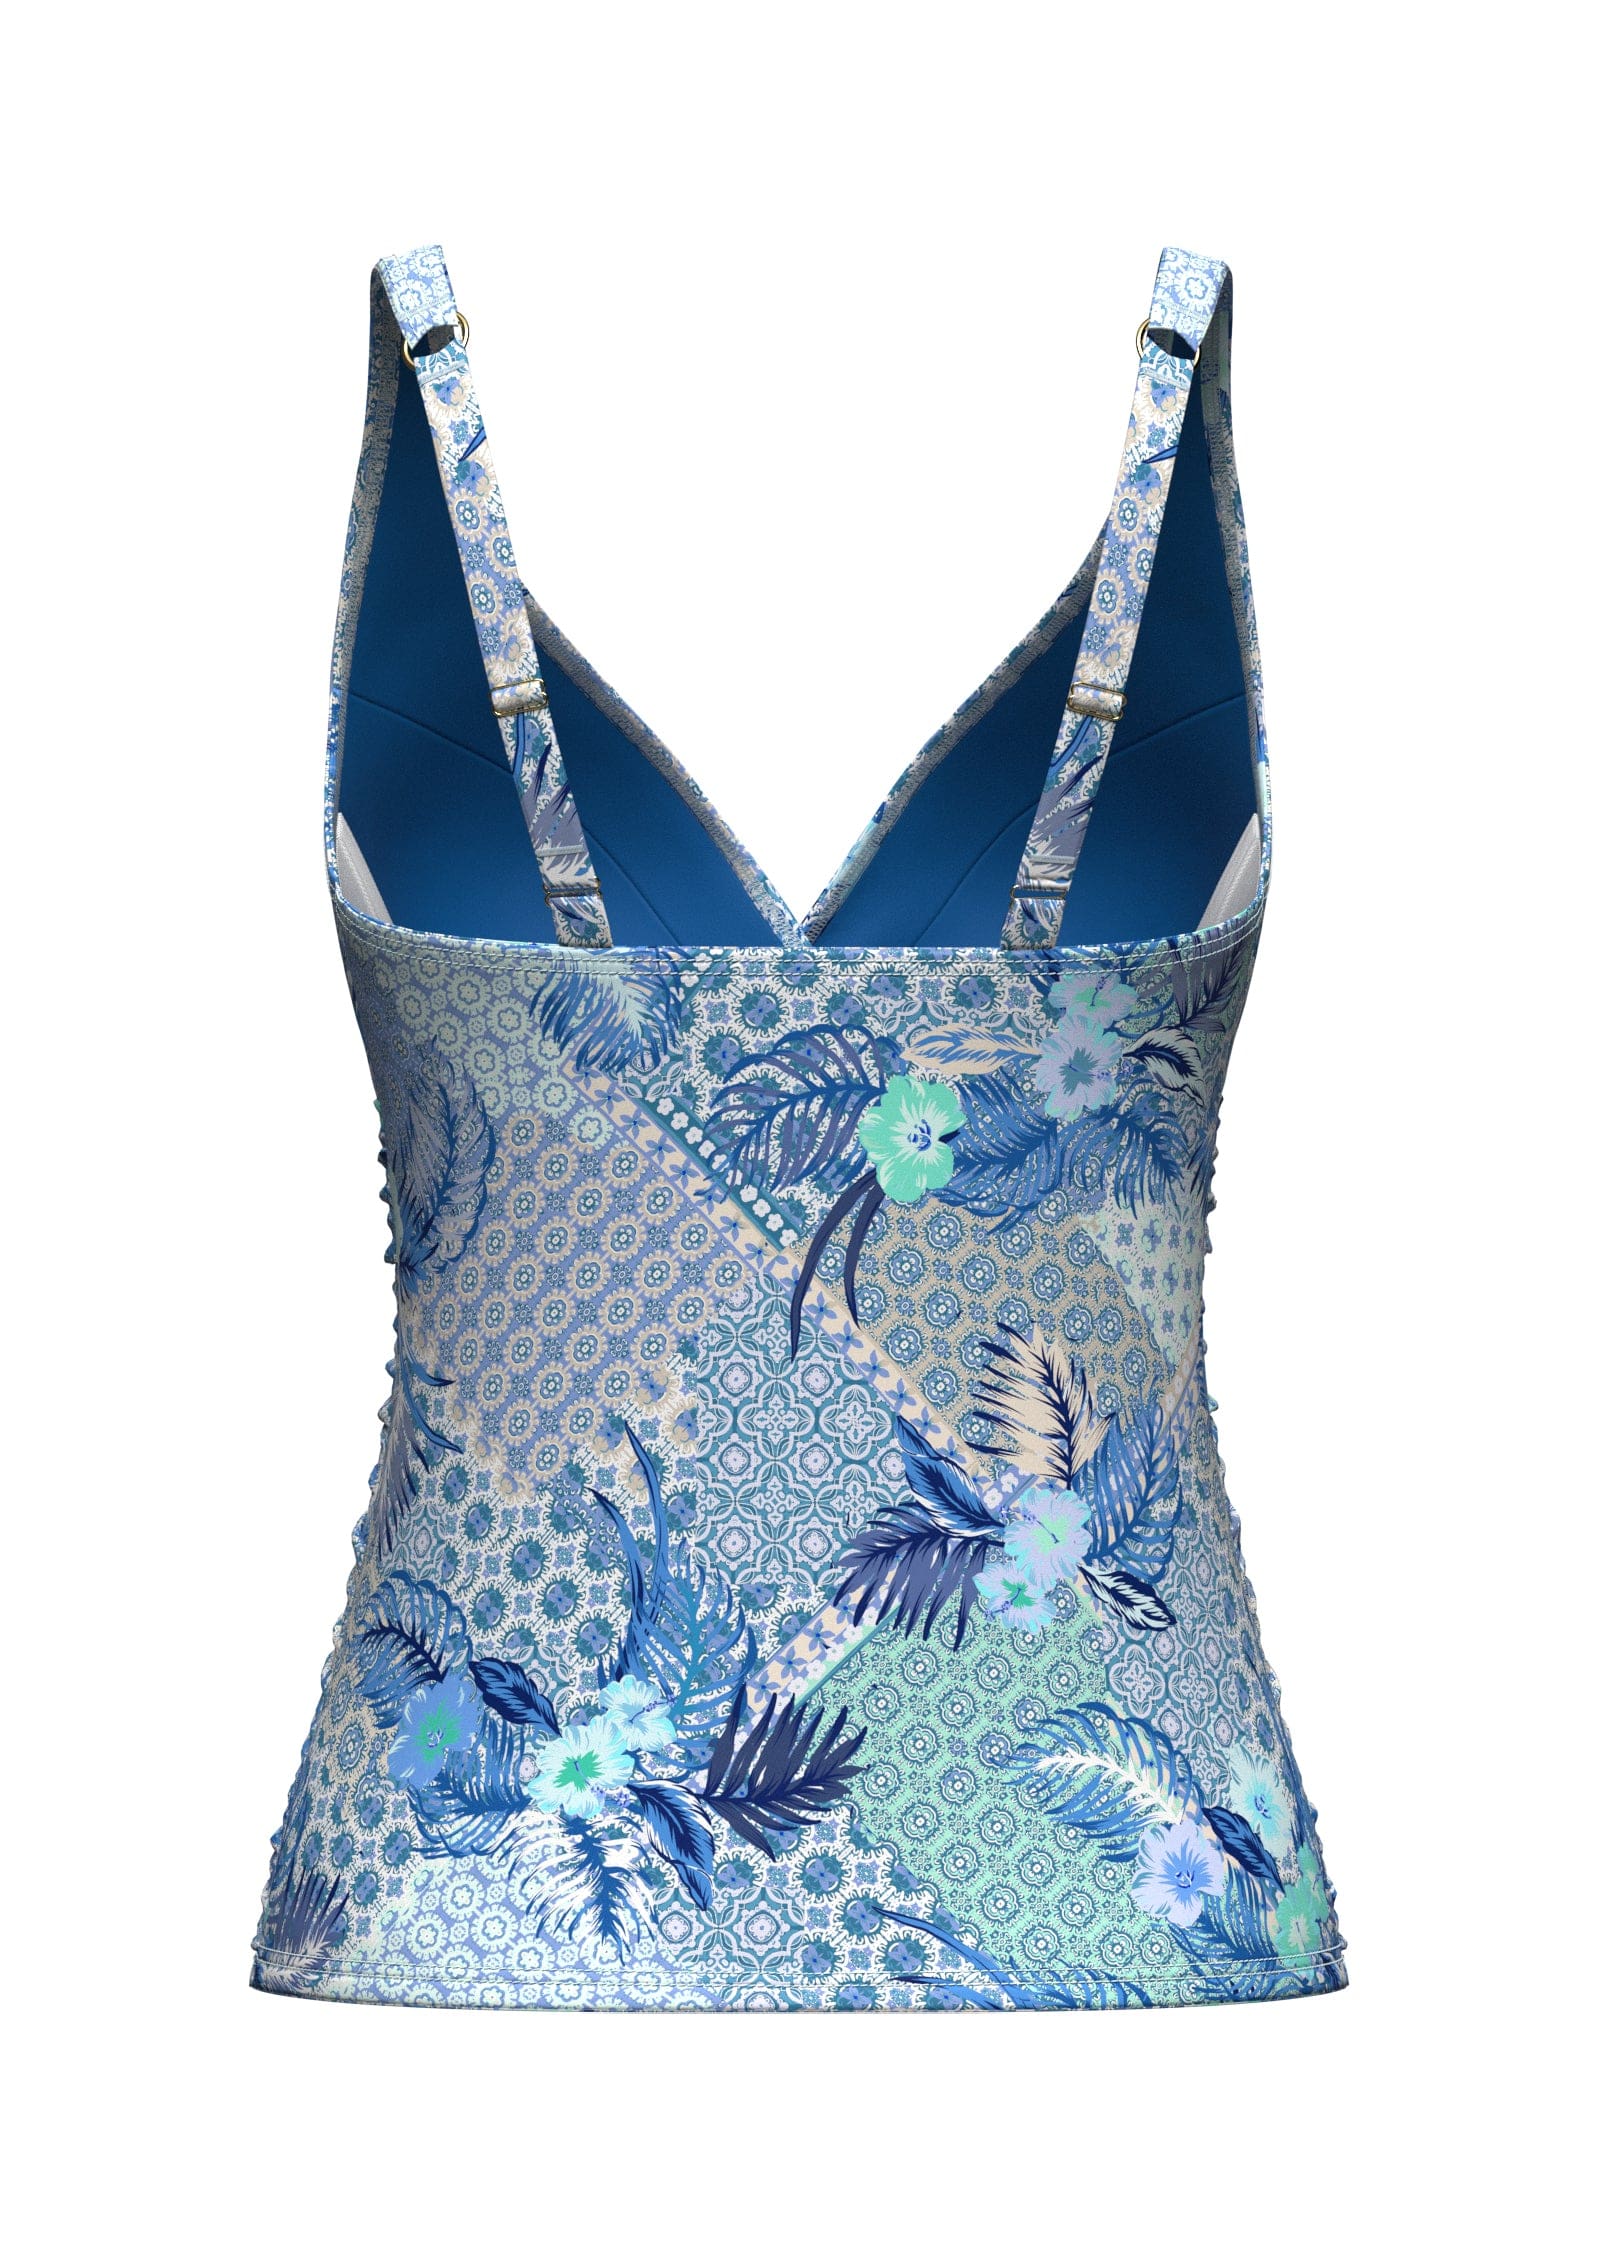 Sunflair Tankini Style Swimsuit